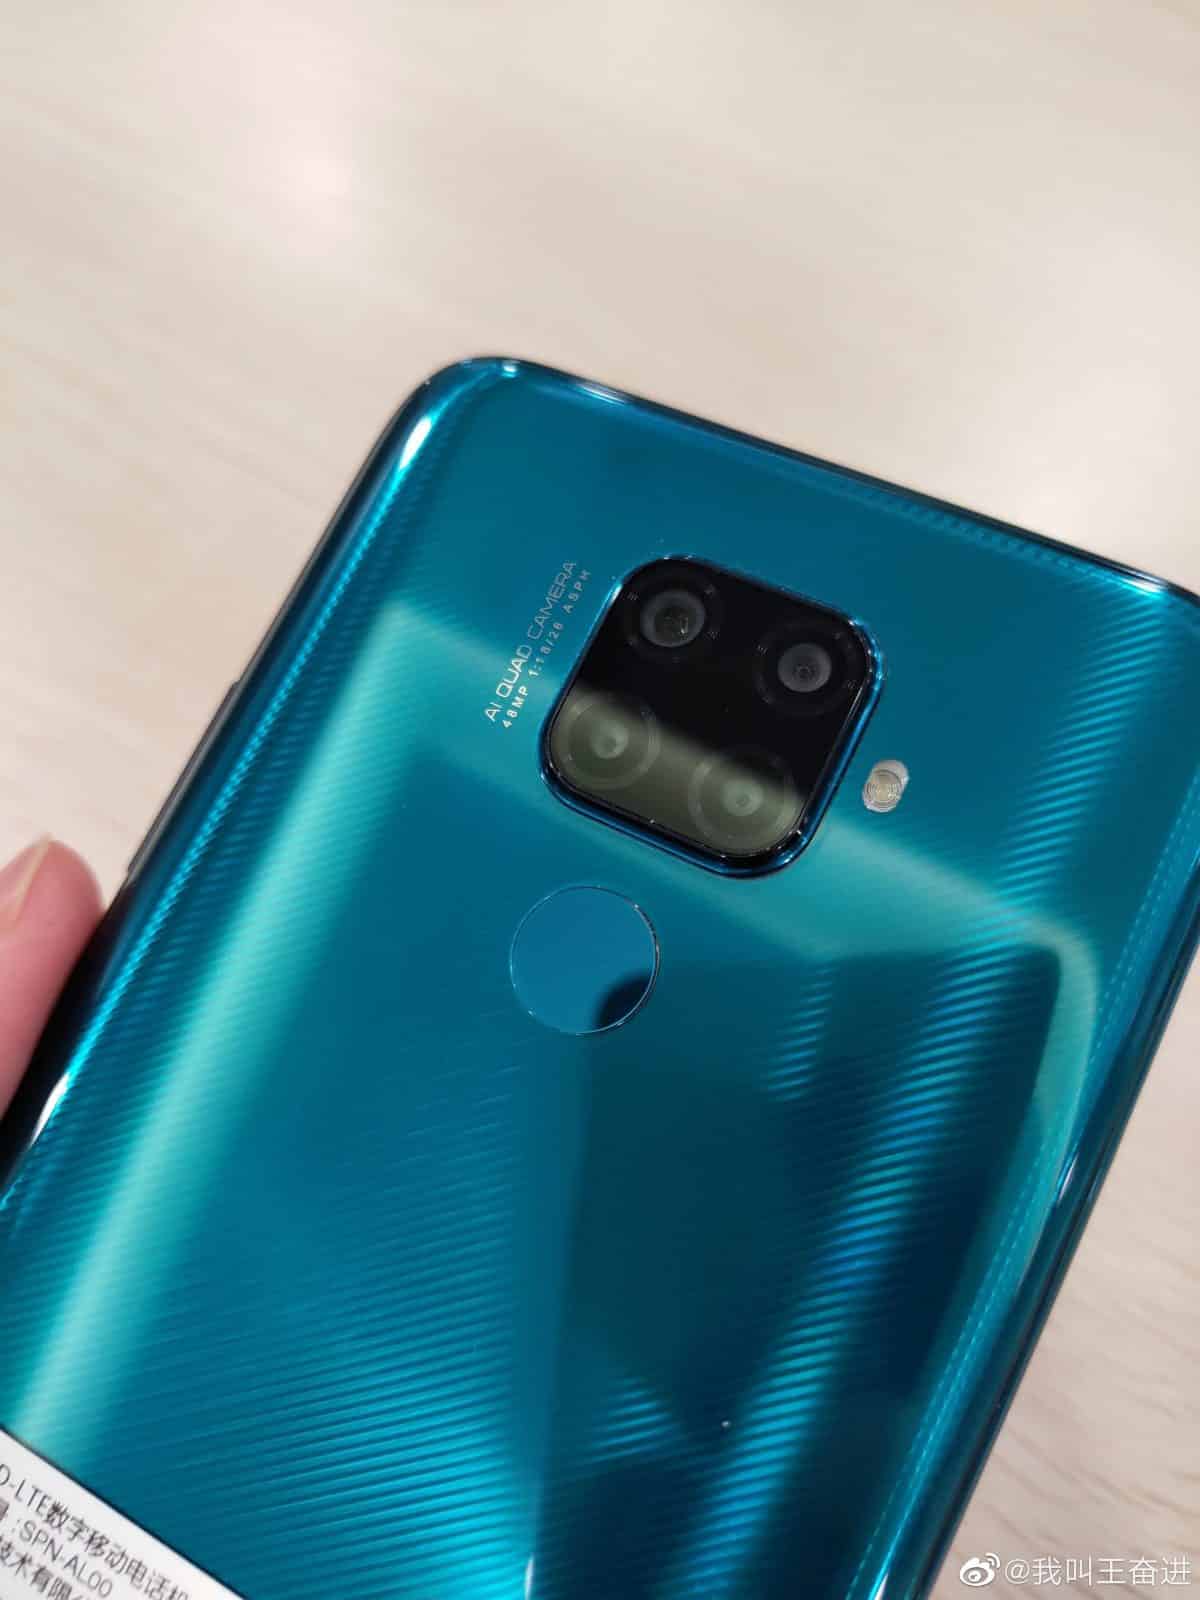 لدى Huawei بالفعل هاتف ذكي بشاشة OLED فقط! 1